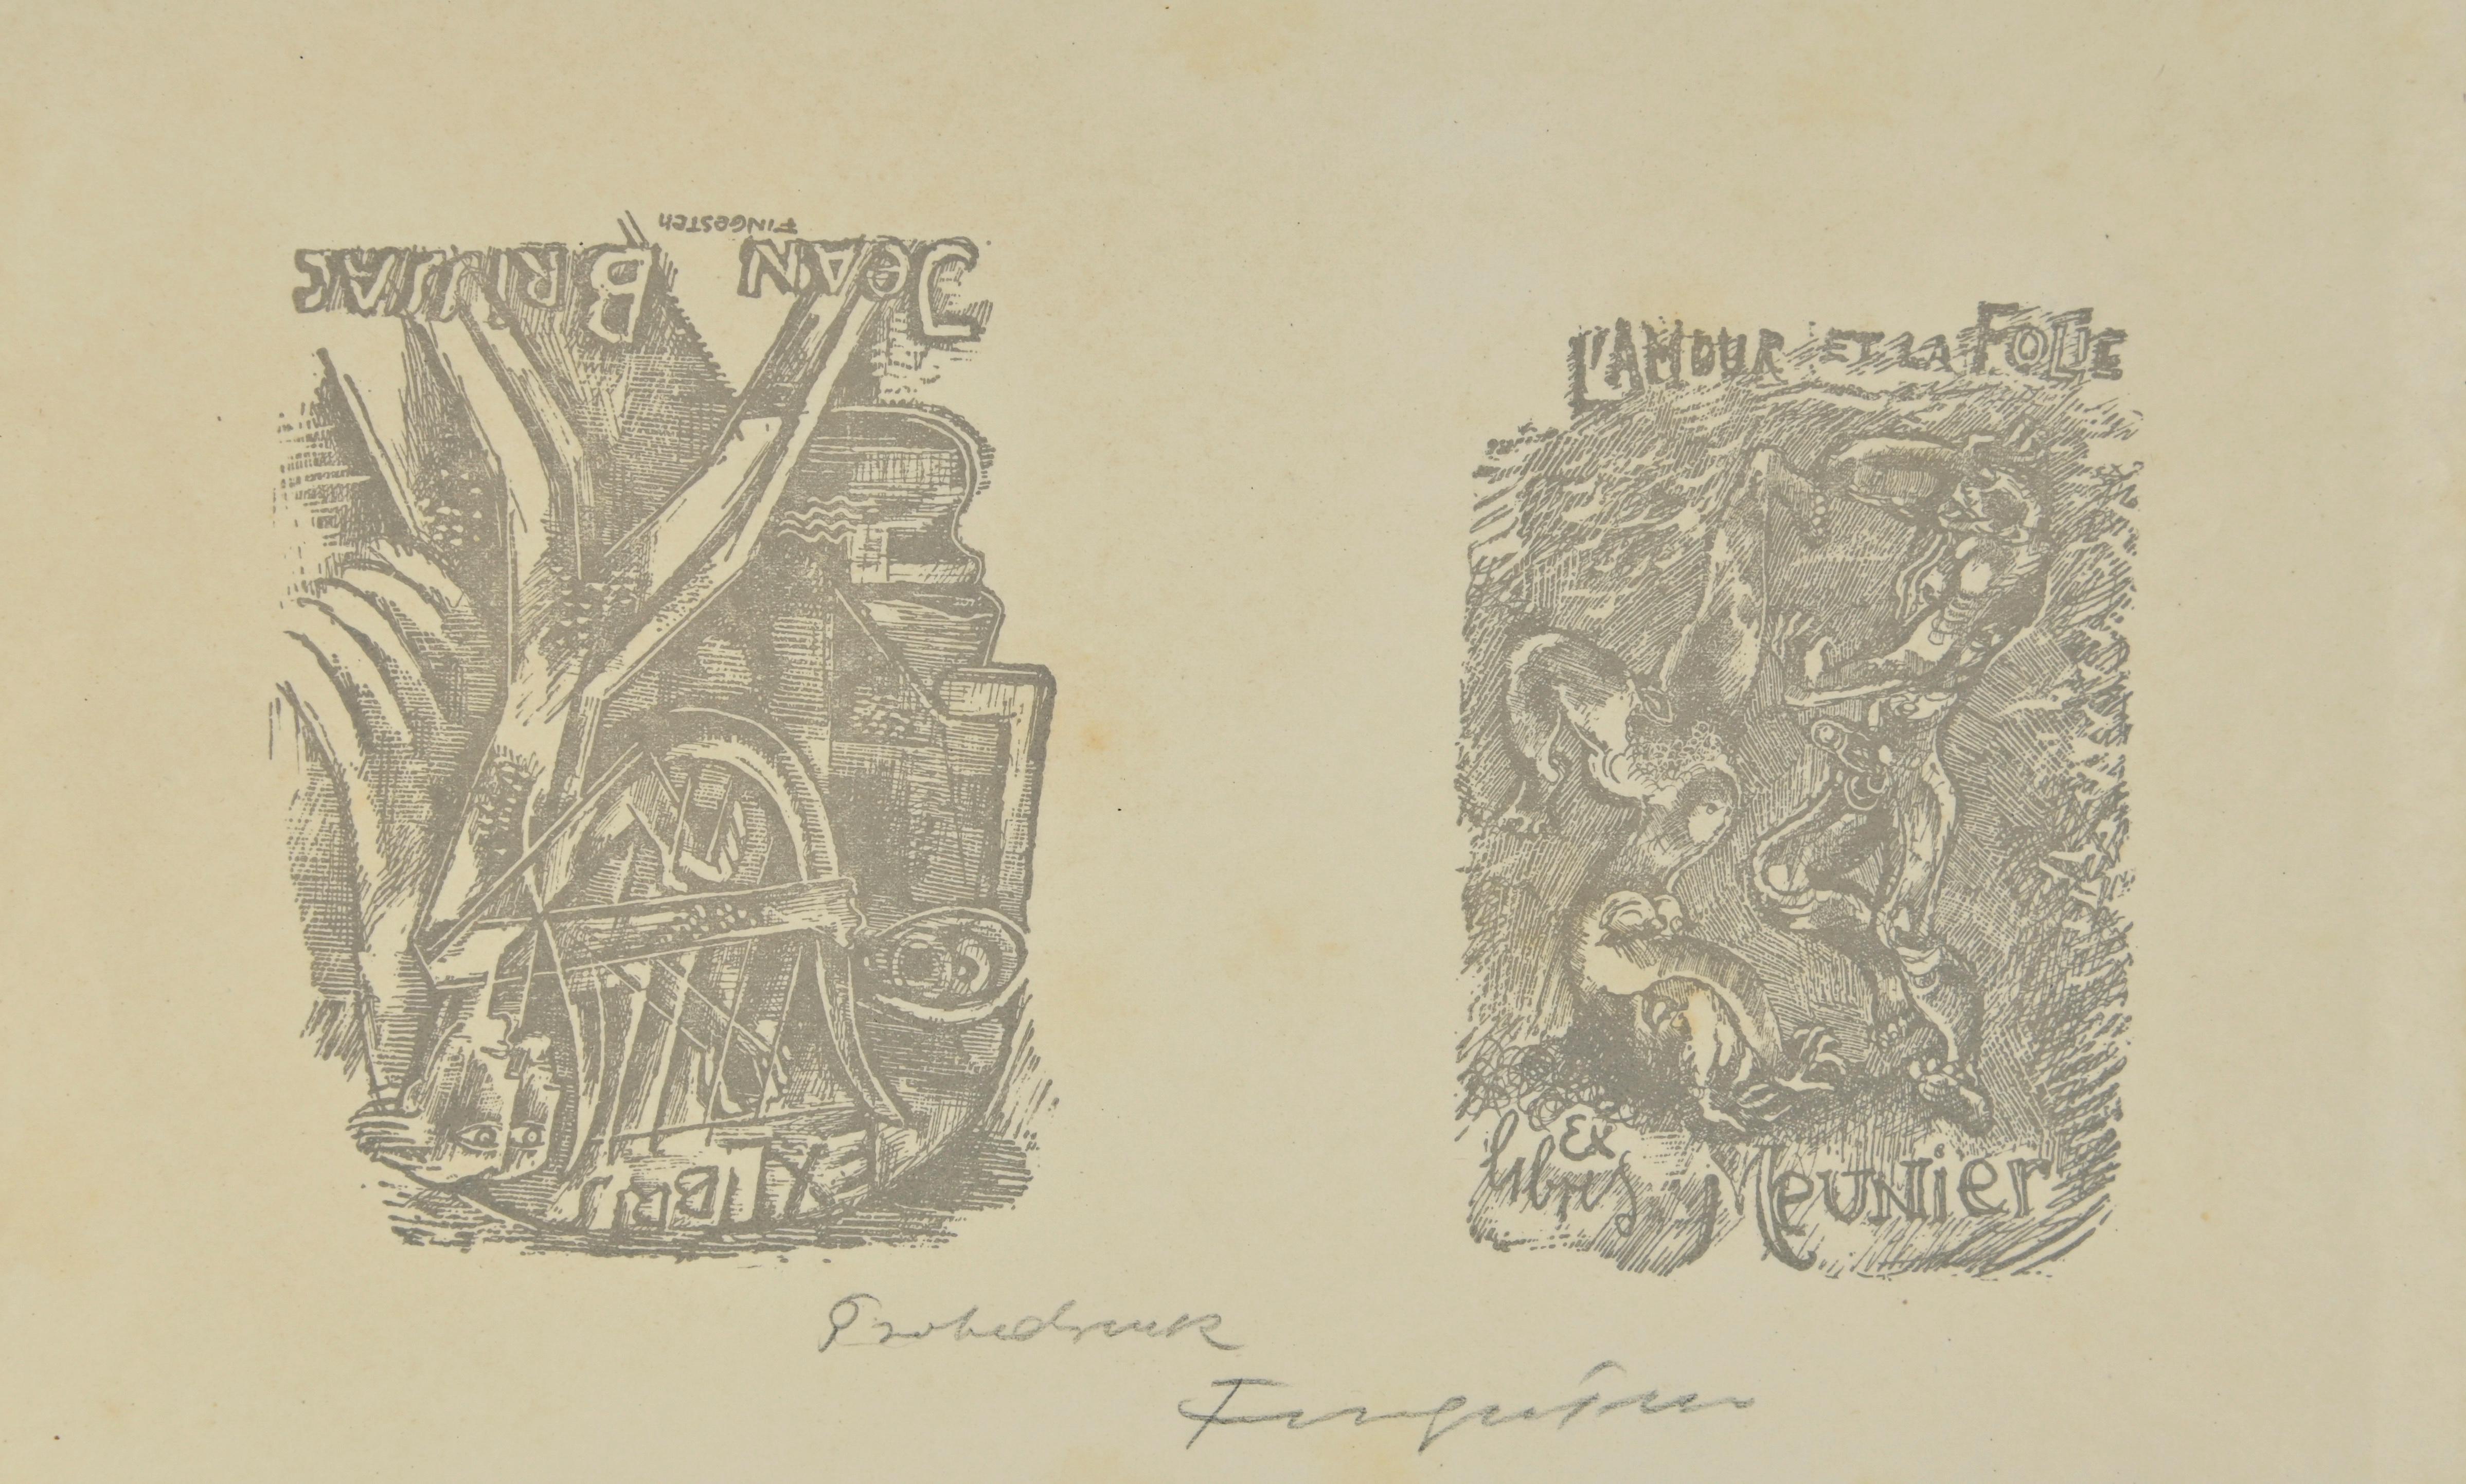 Ex Libris L'Amour et la Folie - Ex Libris  Jean Brissac is a woodcut print created by  Michel Fingesten.

Hand Signed on the lower right margin.

Good conditions.

Michel Fingesten (1884 - 1943) was a Czech painter and engraver of Jewish origin. He